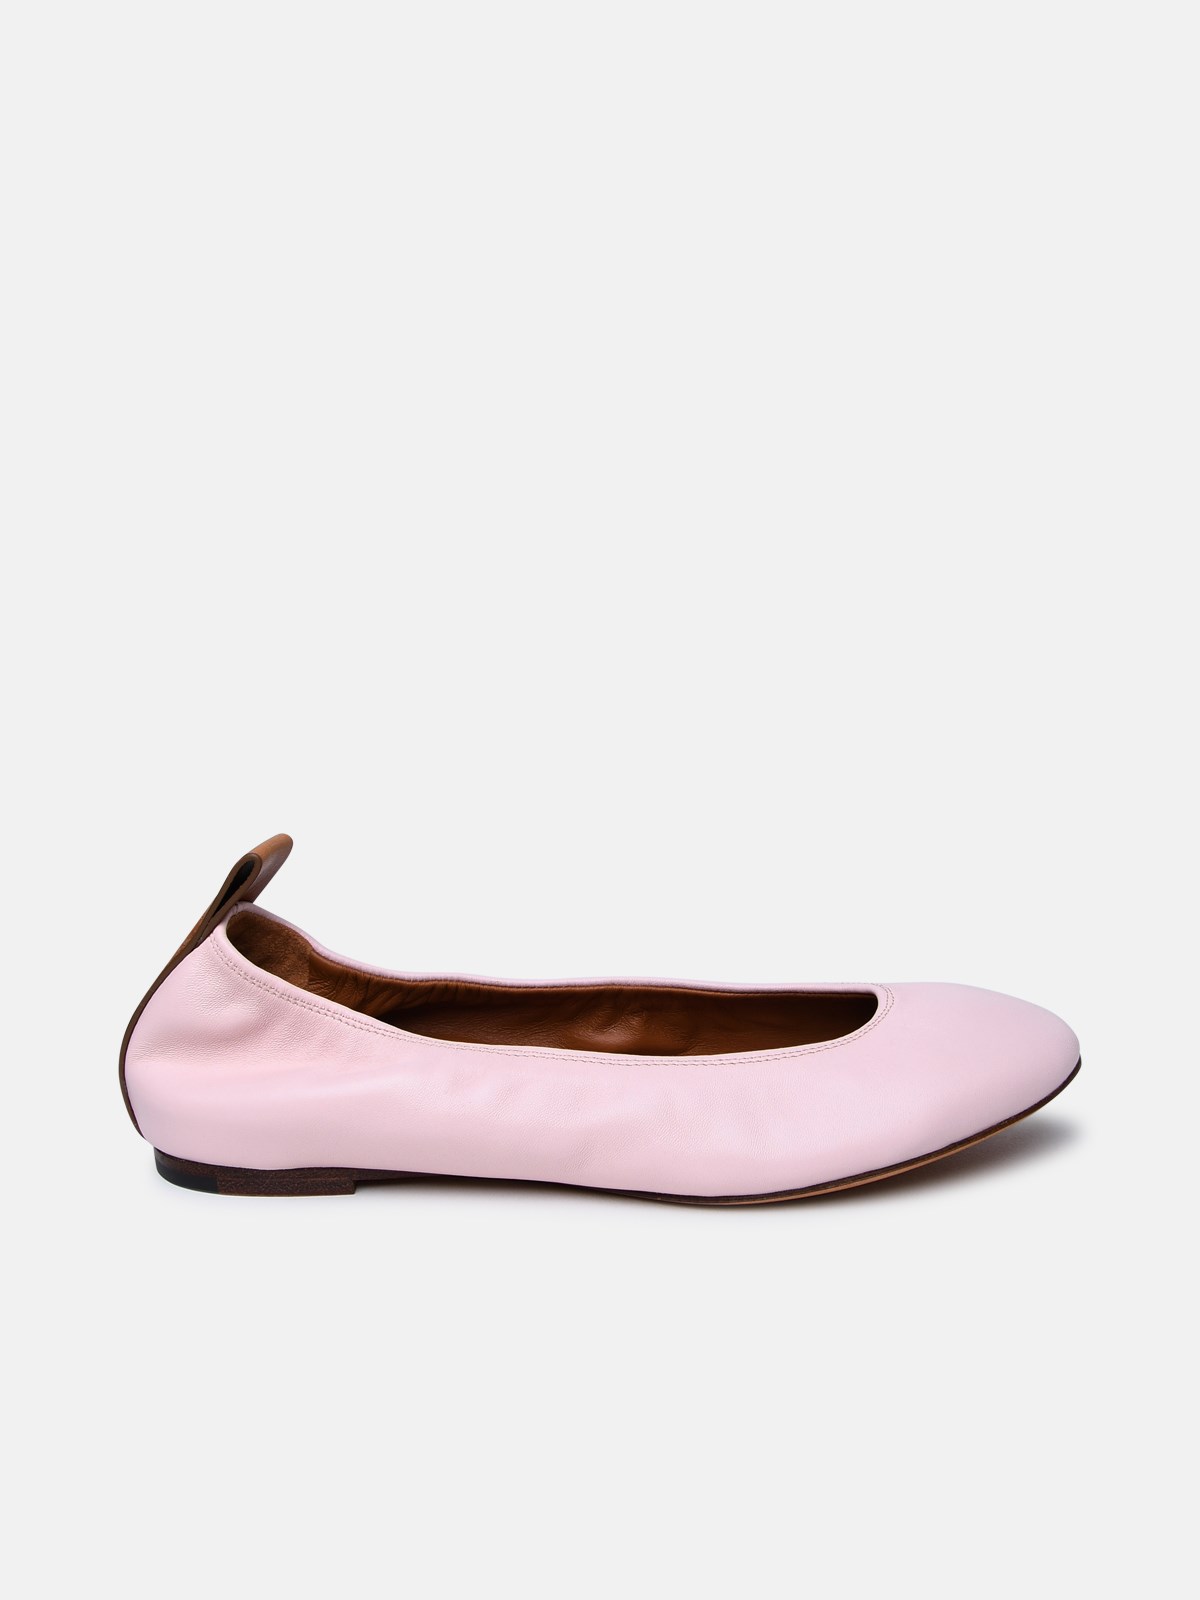 Lanvin Pink Leather Ballet Flats